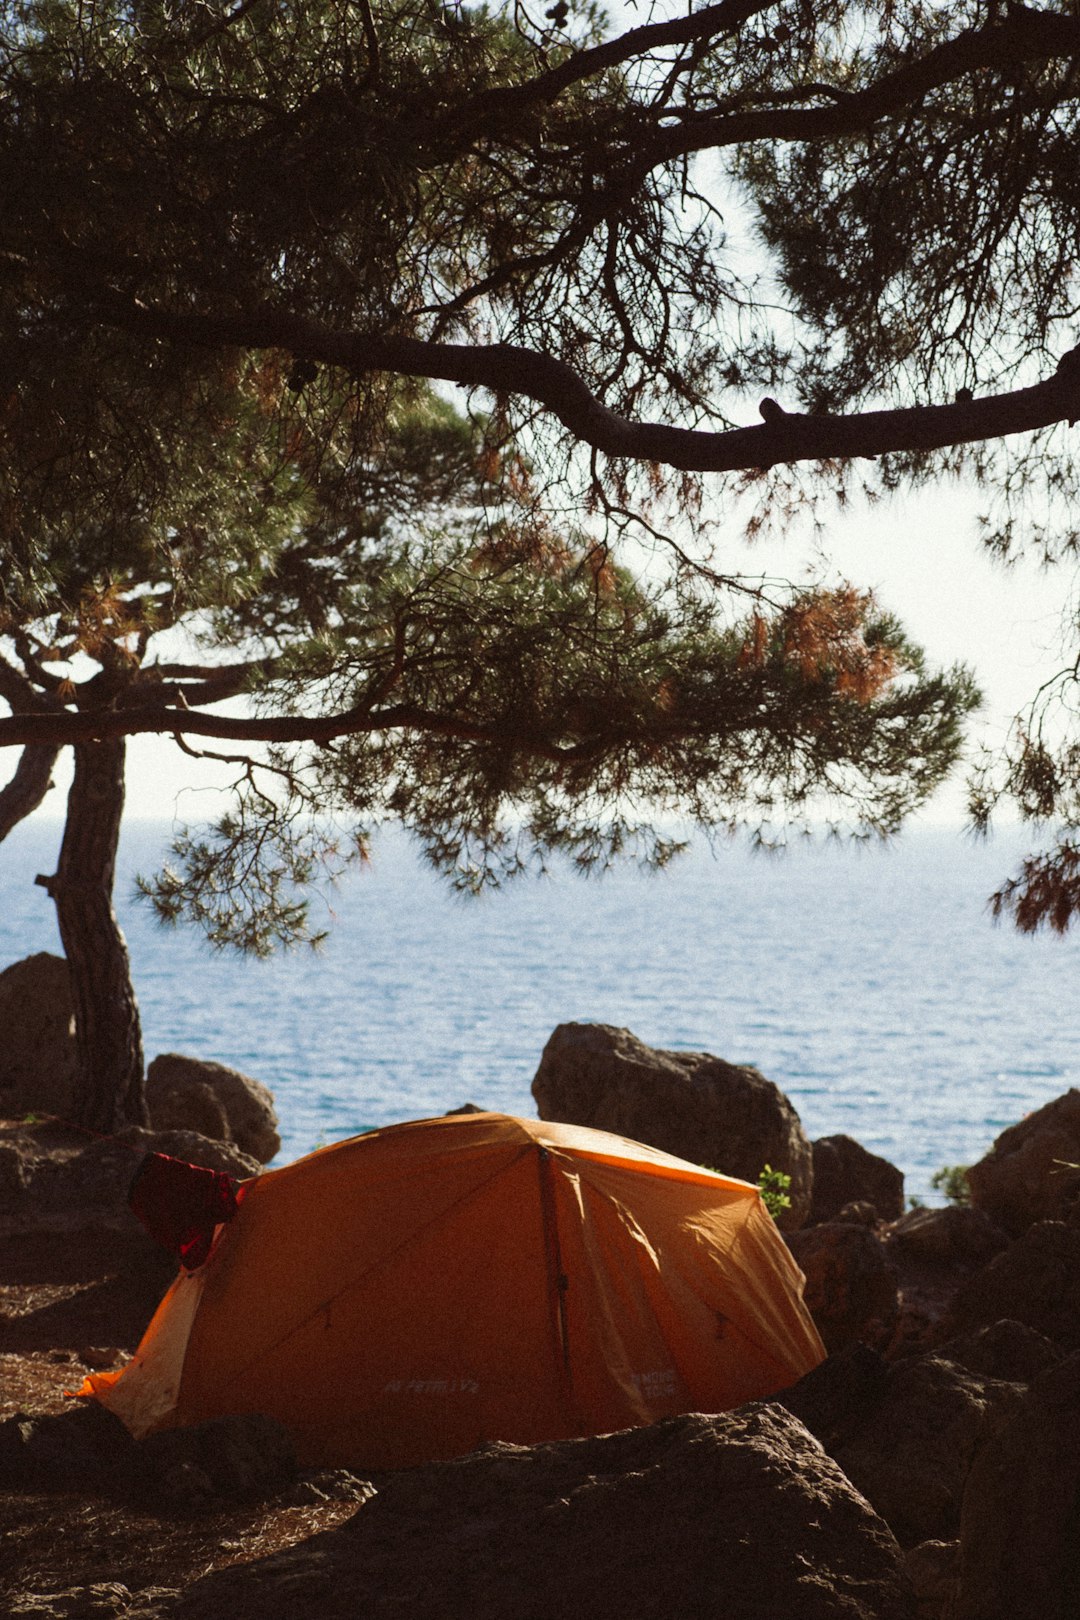 orange tent near body of water during daytime